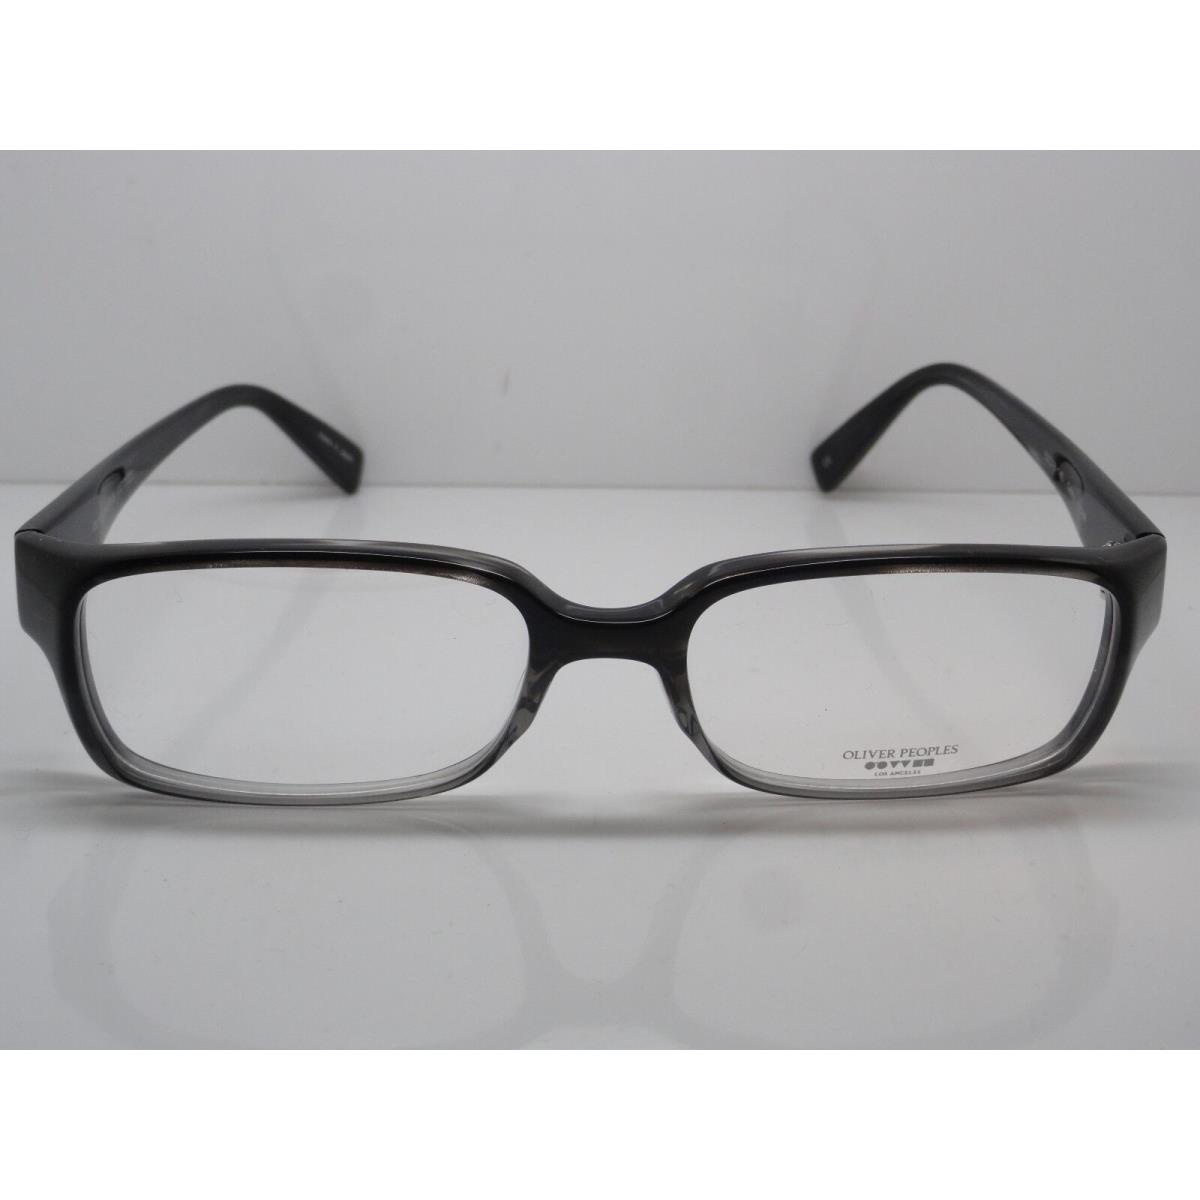 Oliver Peoples Gehry Strm Storm Grey 53mm Eyeglasses